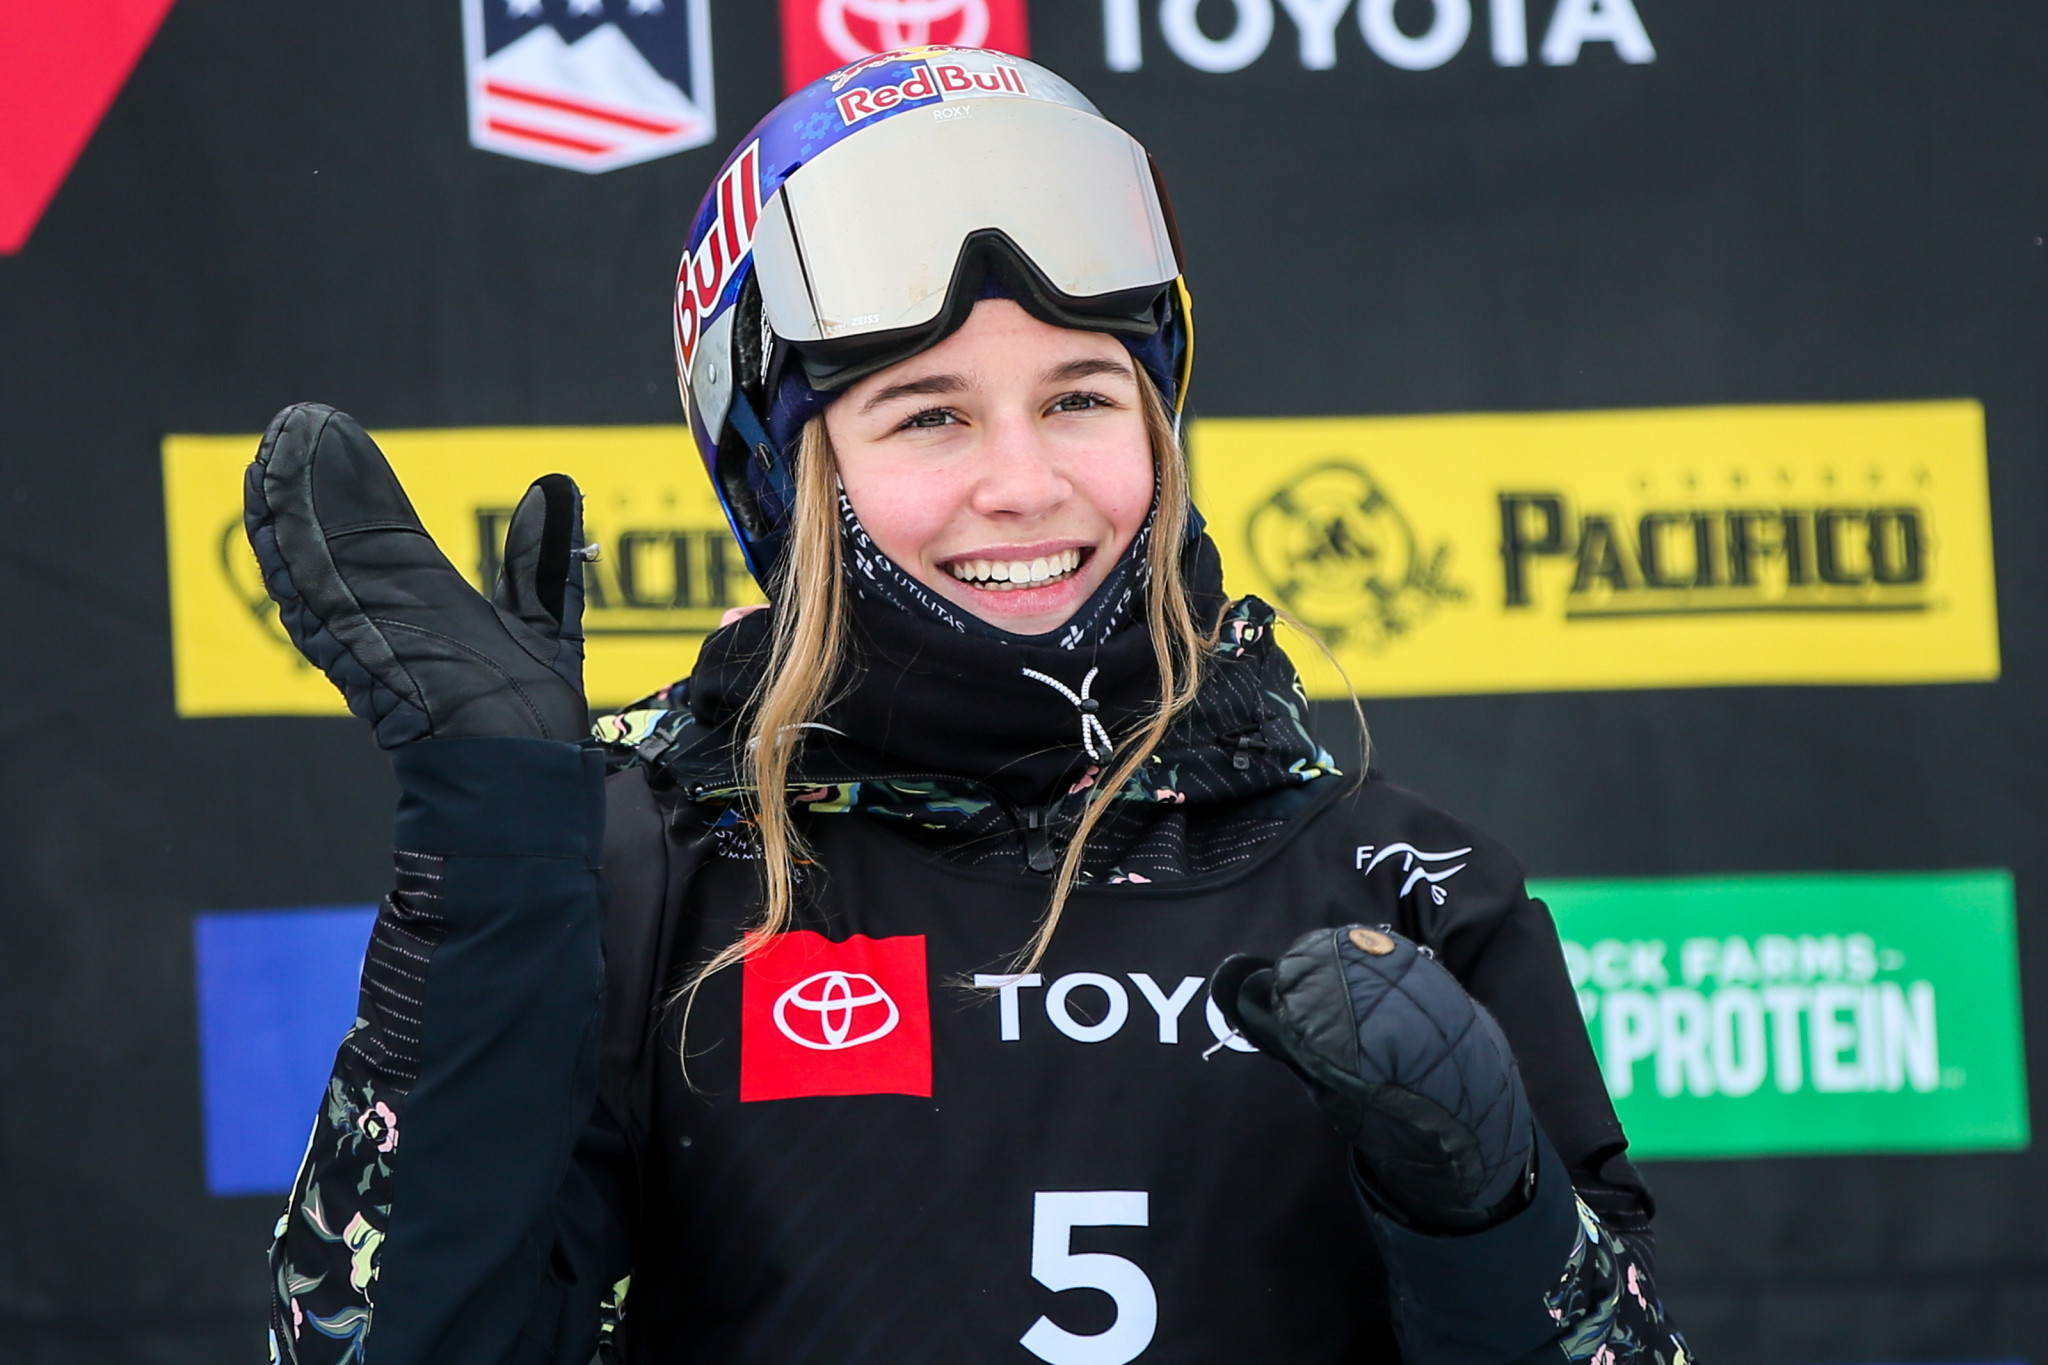 Teenage sensation Sildaru dominates women's slopestyle qualifying at FIS World Junior Freestyle Skiing Championship